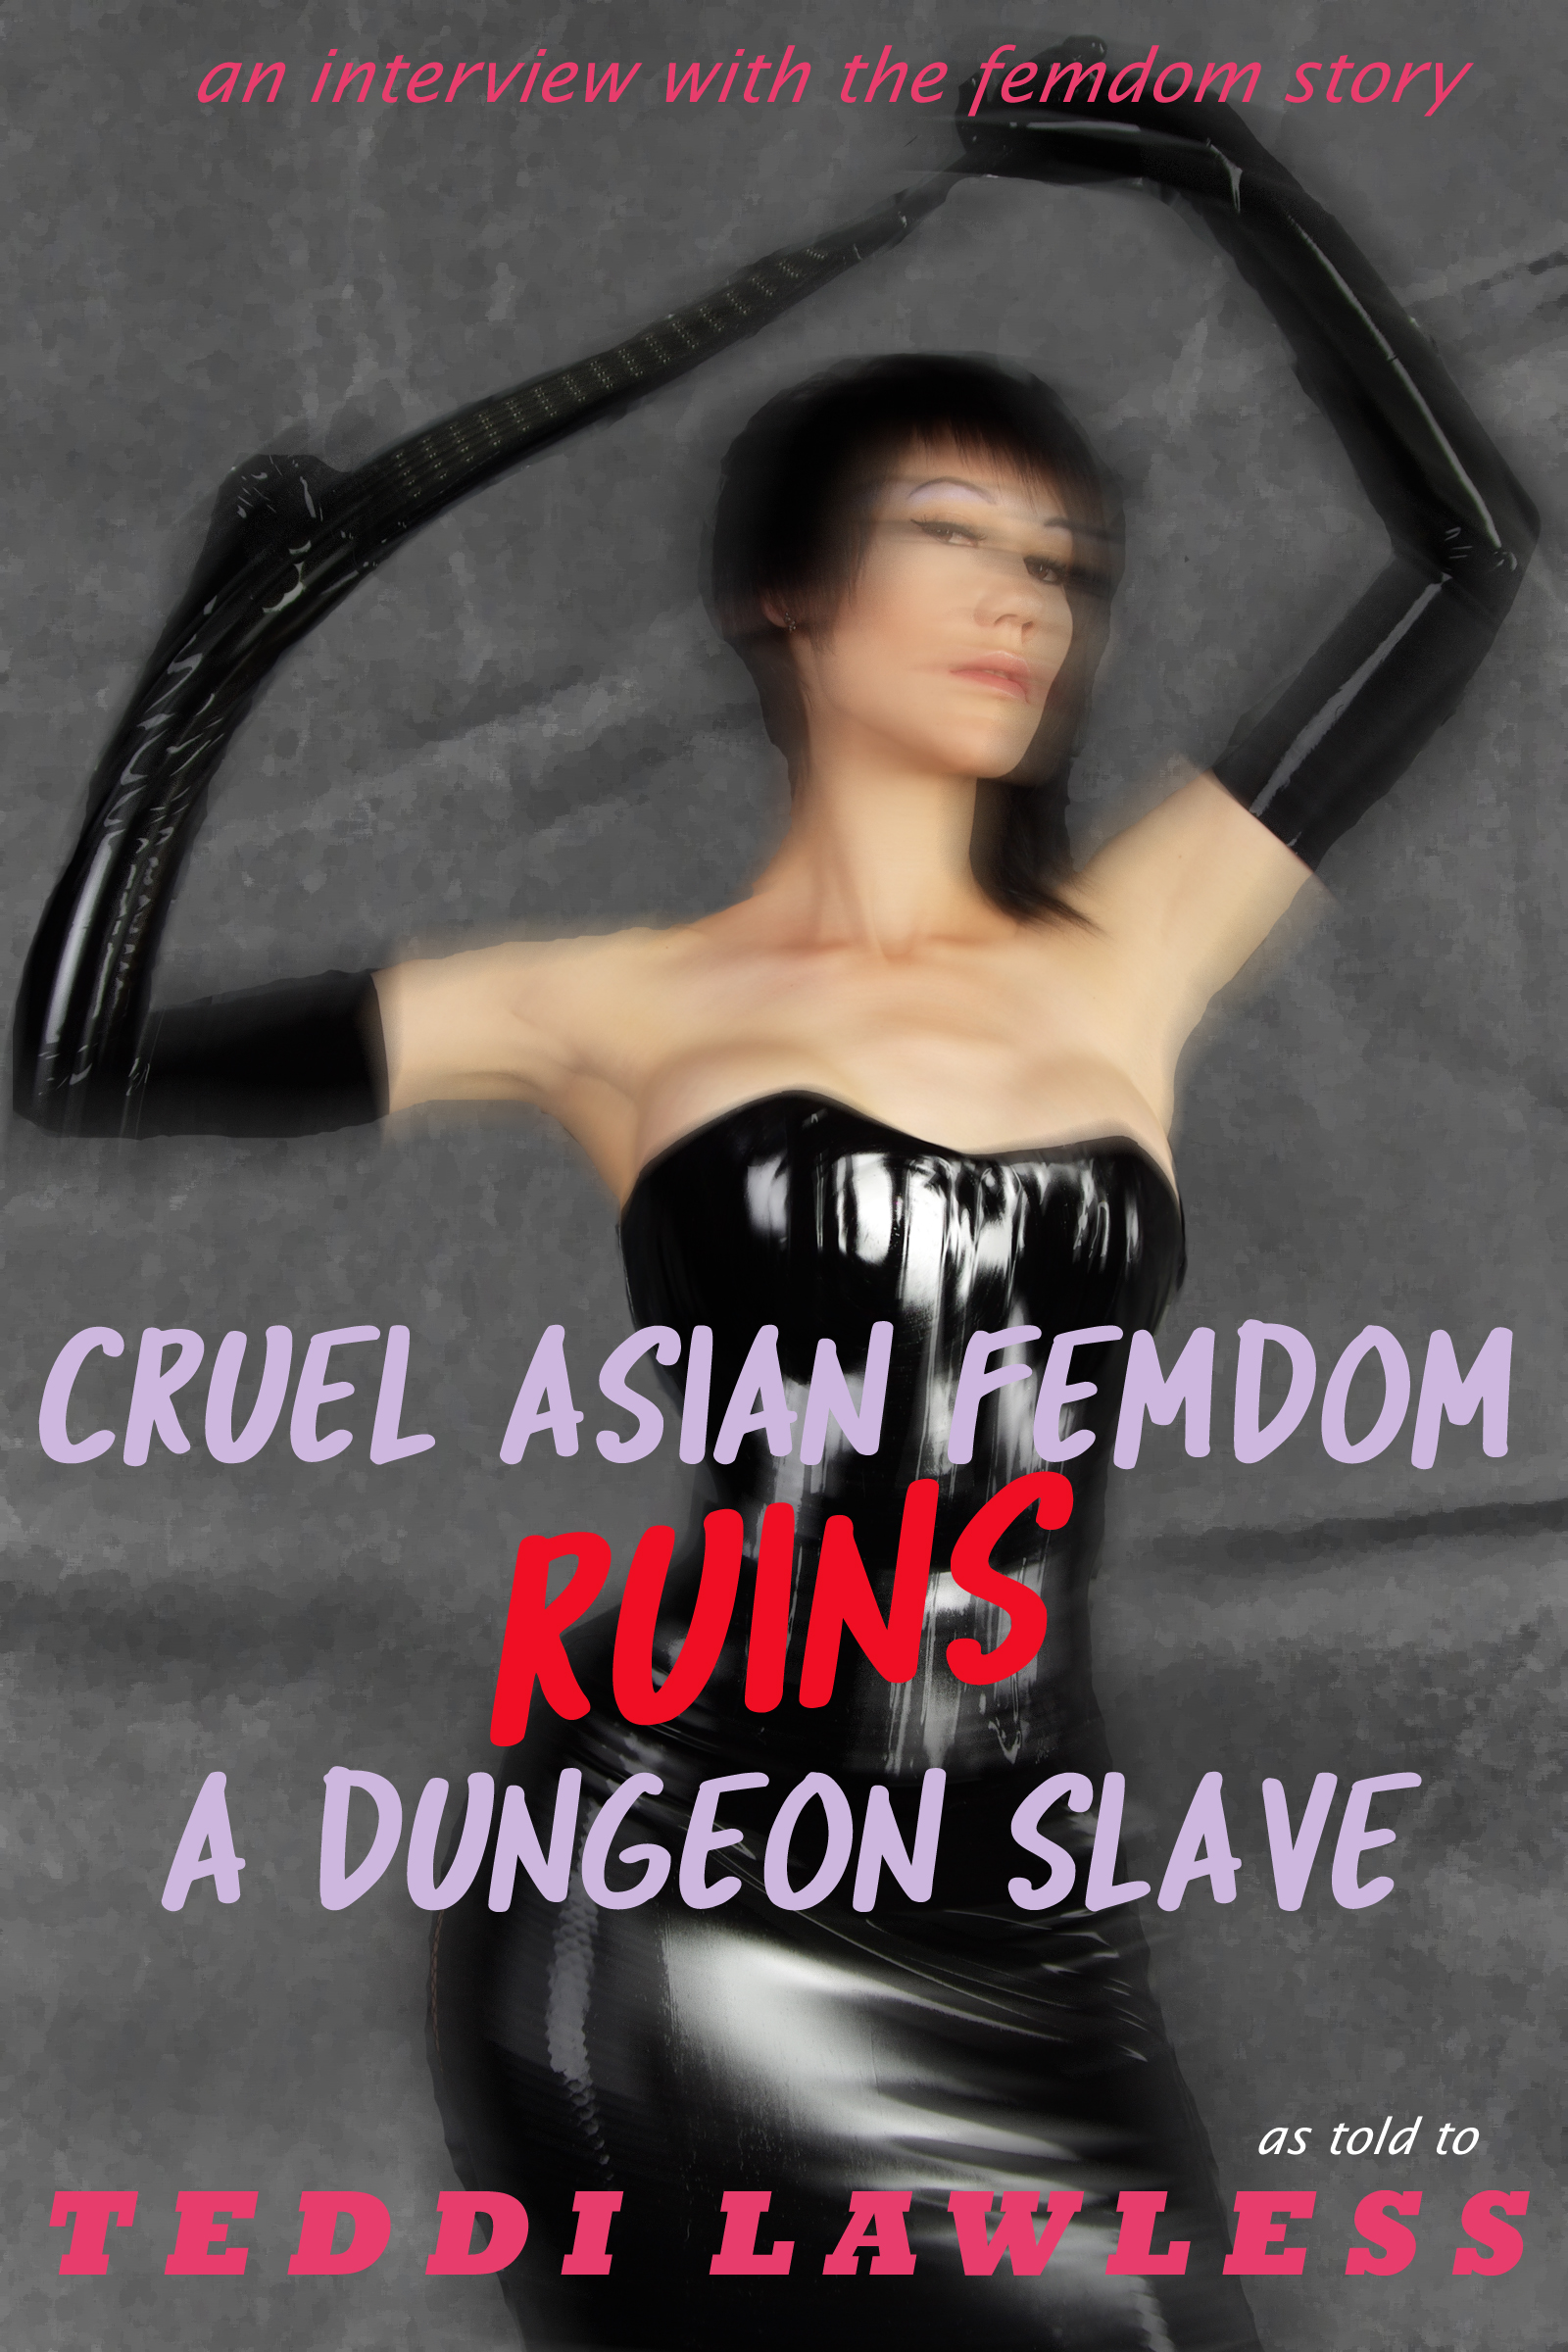 Asian Femdom Story